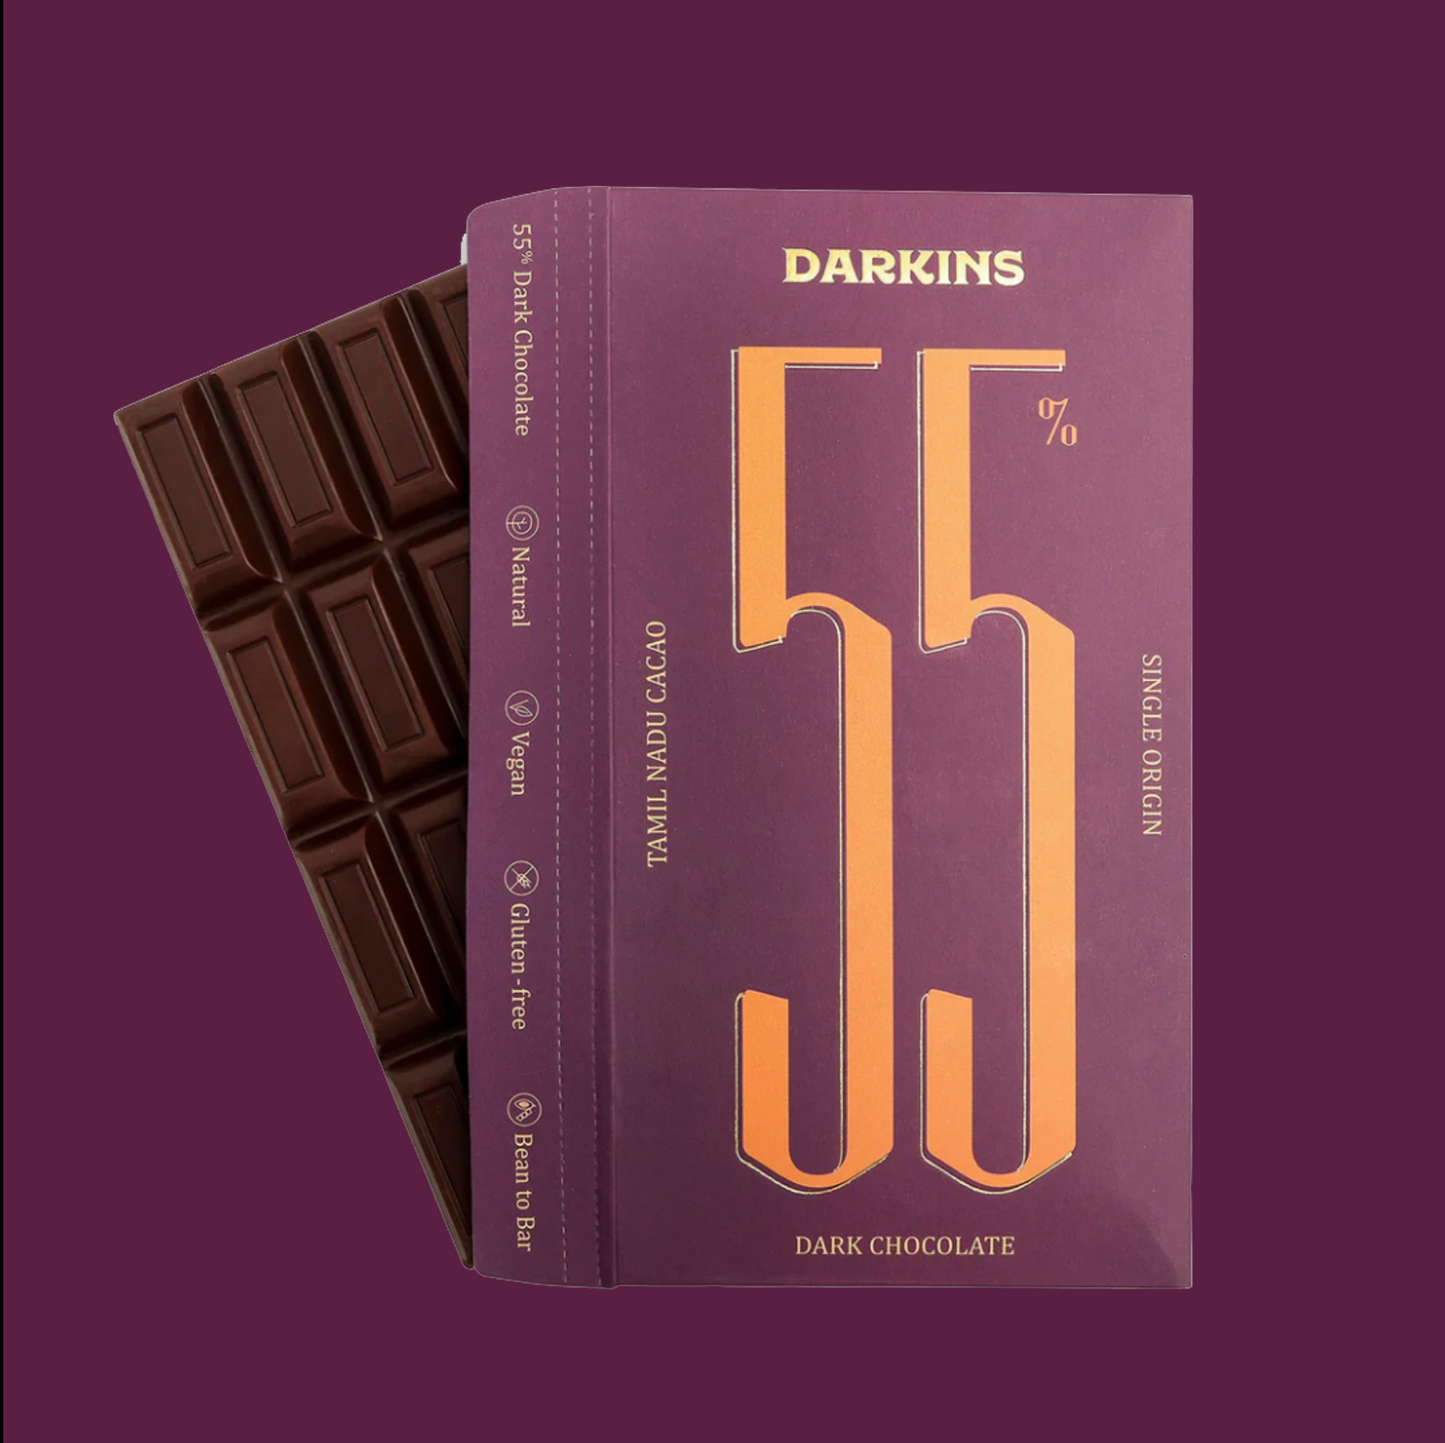 Darkins 55% Dark Chocolate Single Origin Cacao from Tamil Nadu